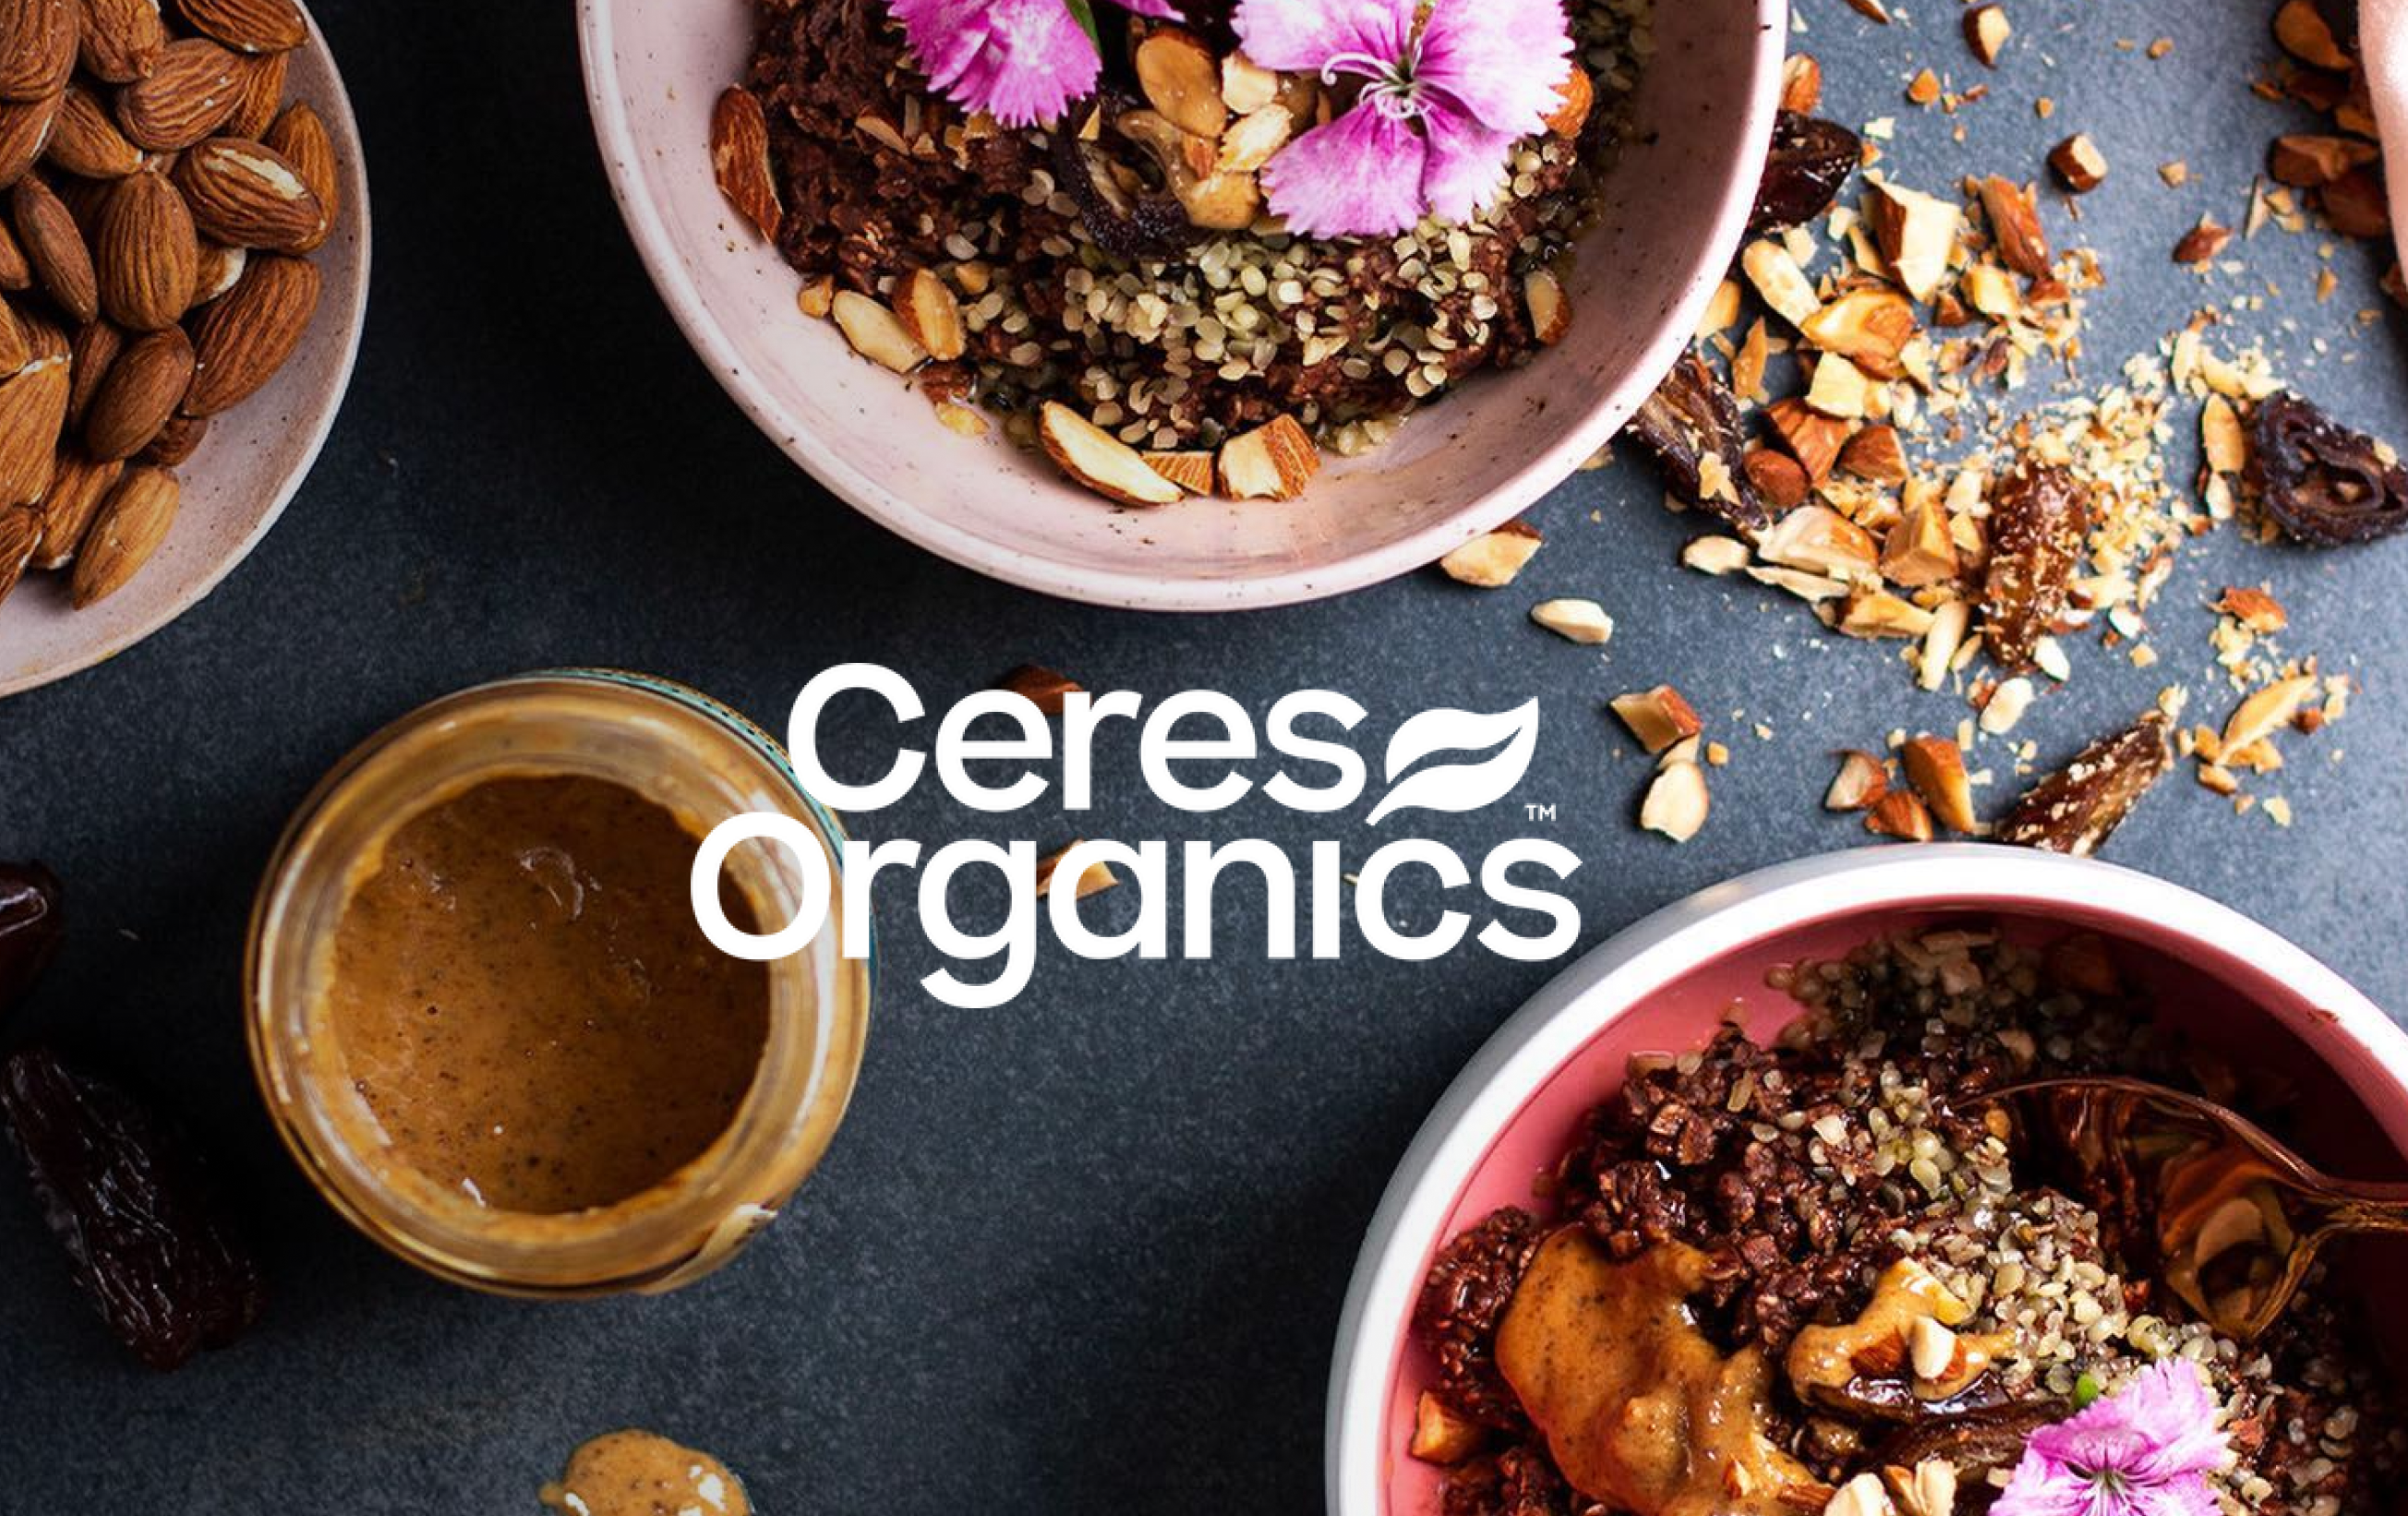 Ceres Organics Natural Foods Manufacturer Logo and Background